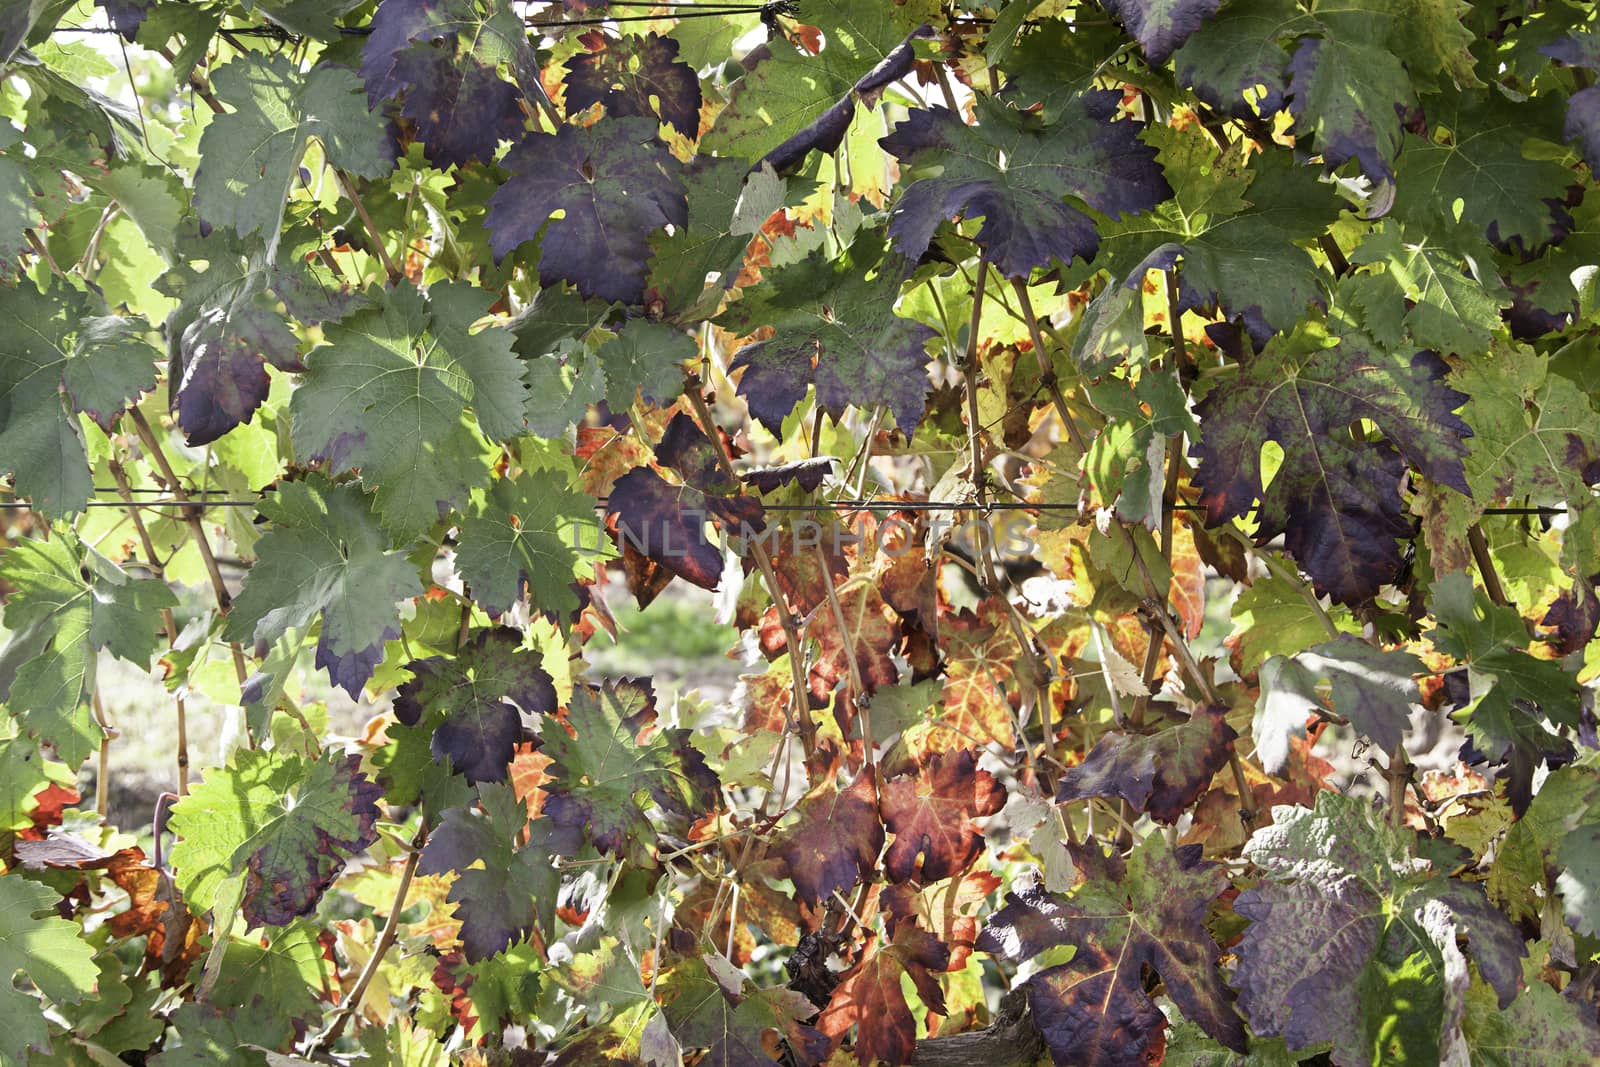 Vines in the field by esebene